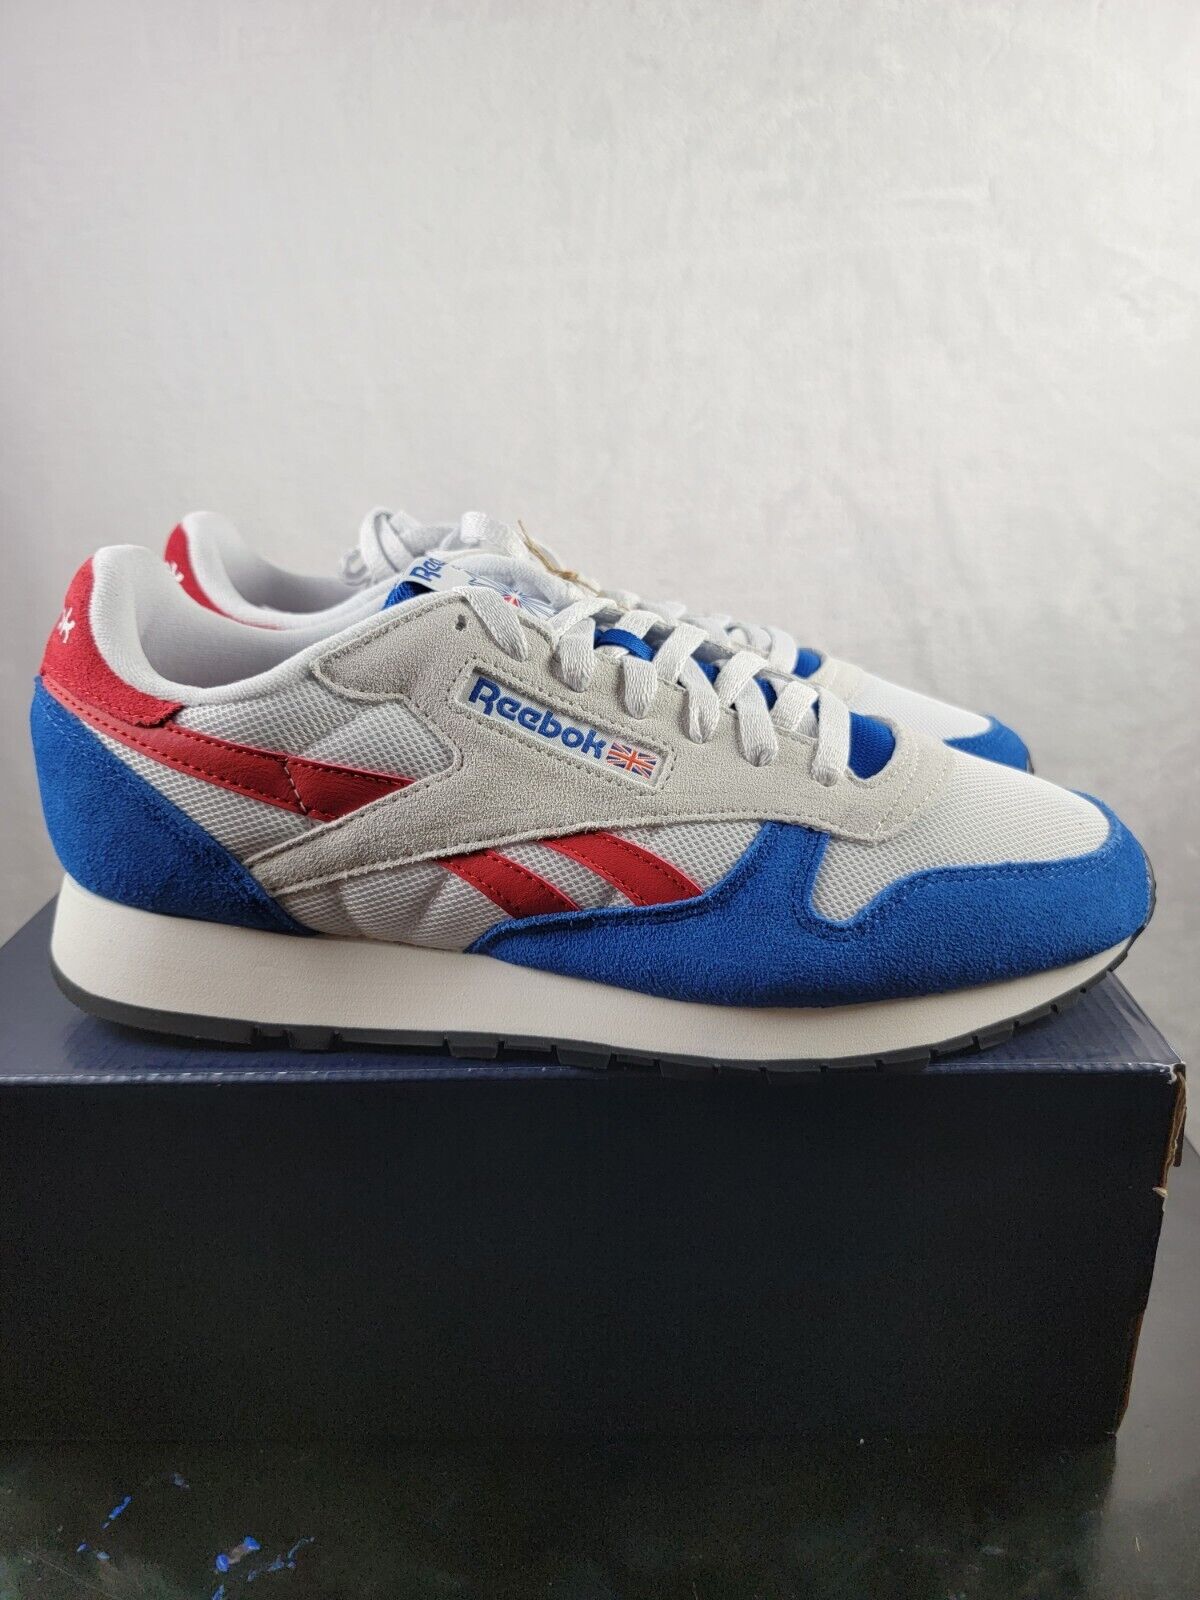 Reebok Classic Nylon Men’s Athletic Sneaker Red/Blue/White Trainer GX2257  Sz 11